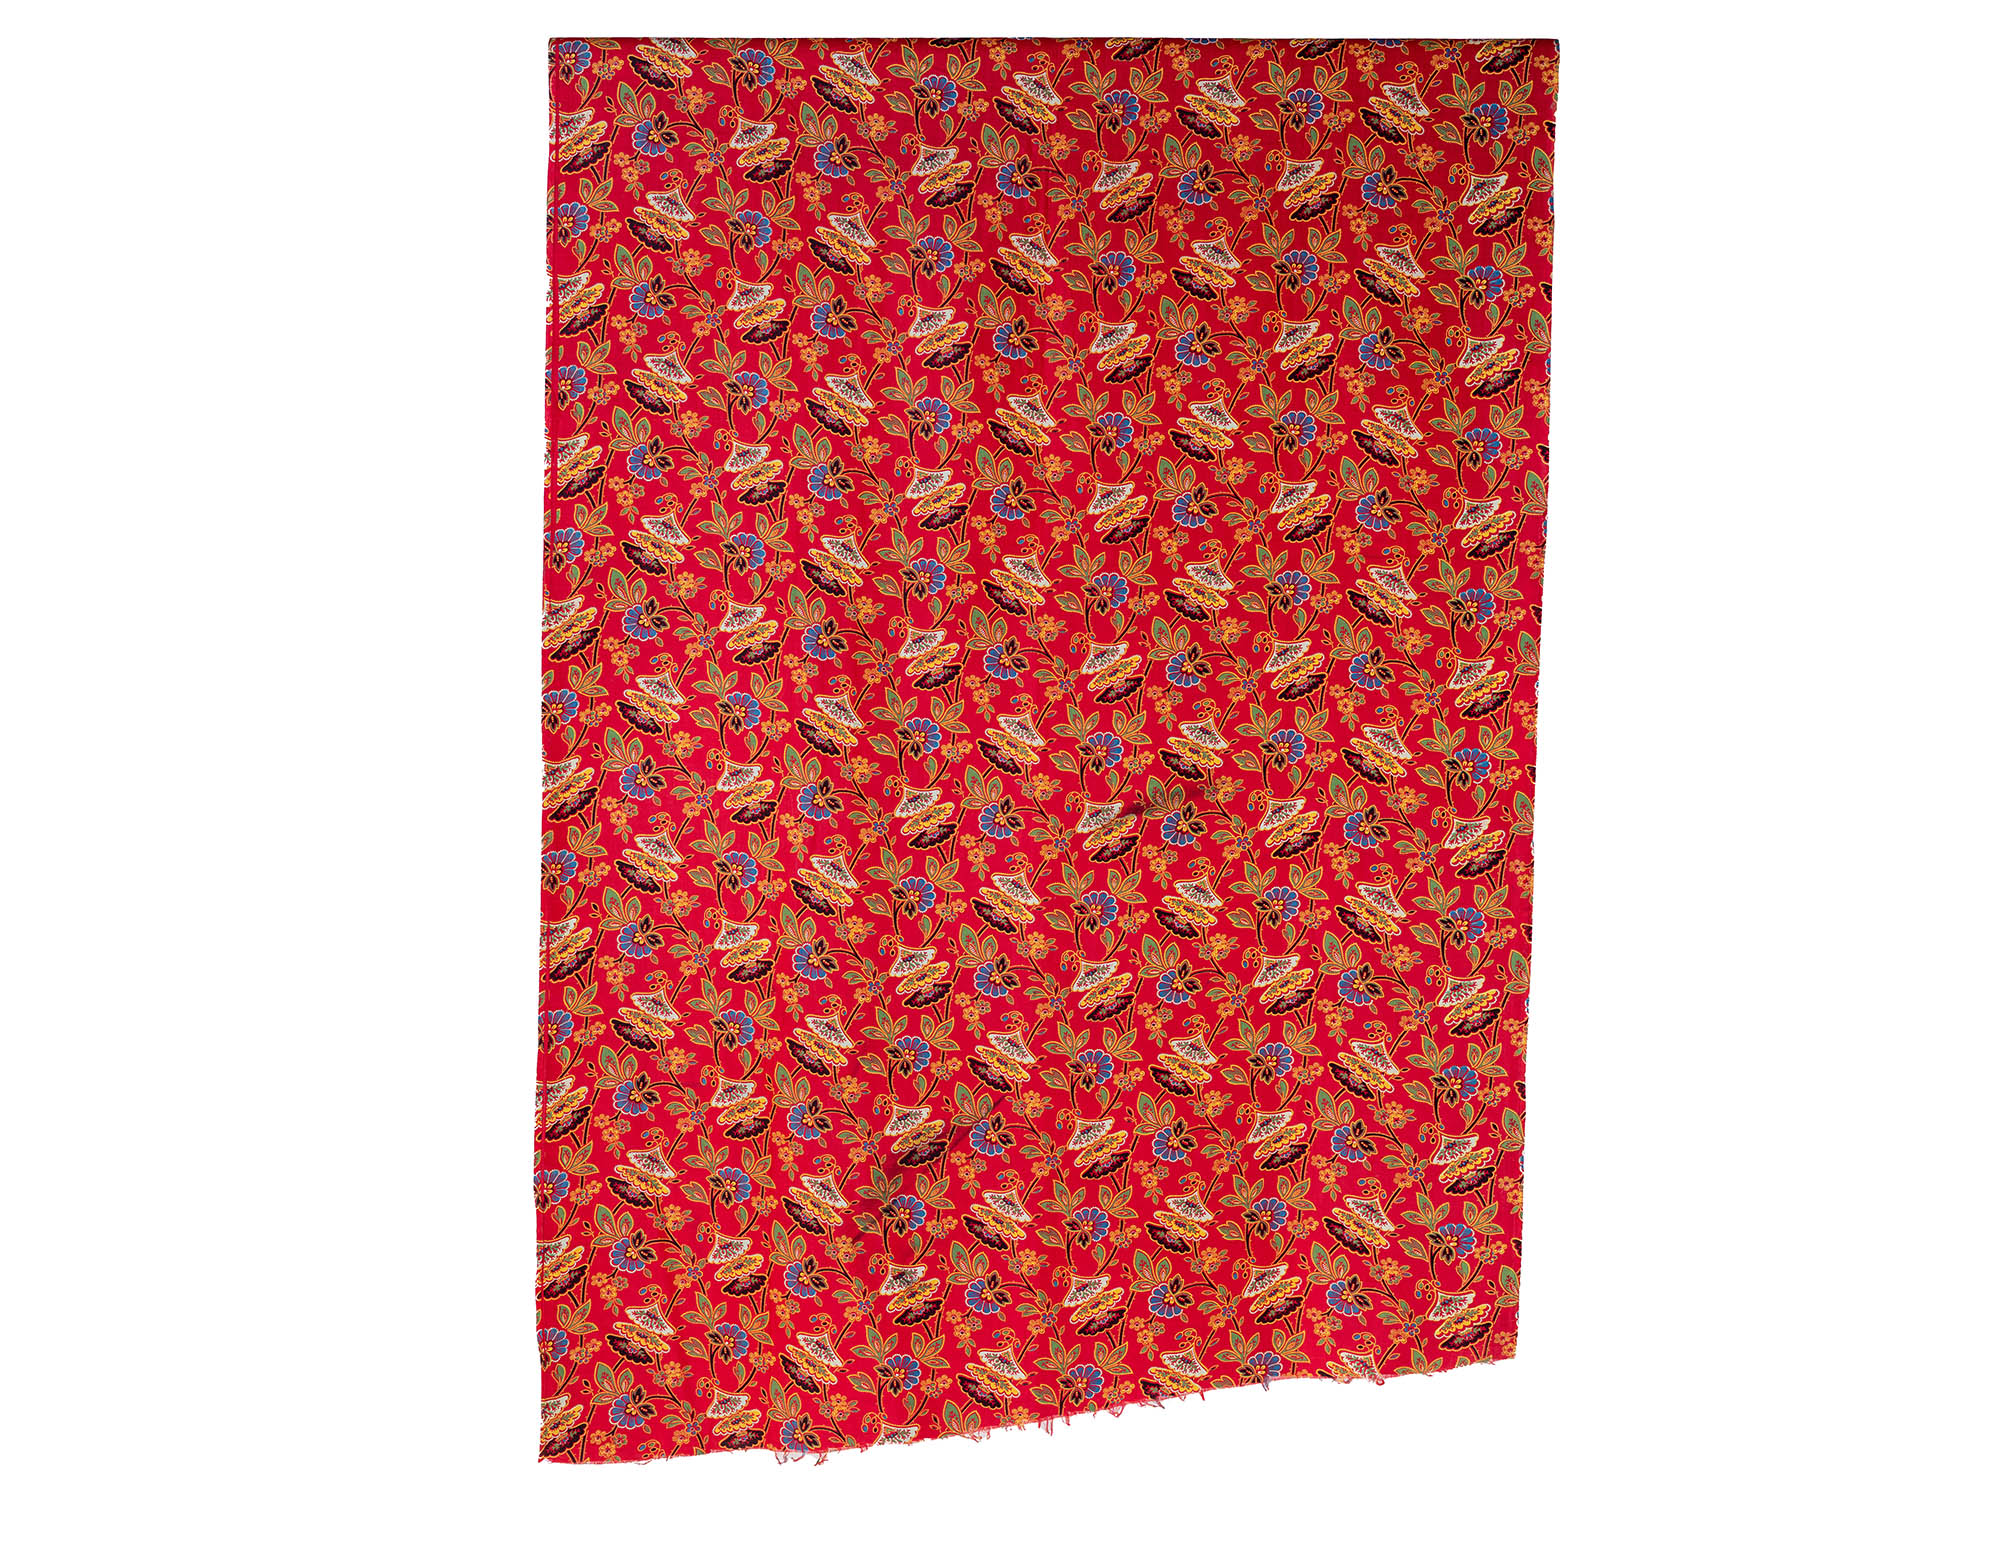 3B-6651-Turkey-red-printed-fabric-sample